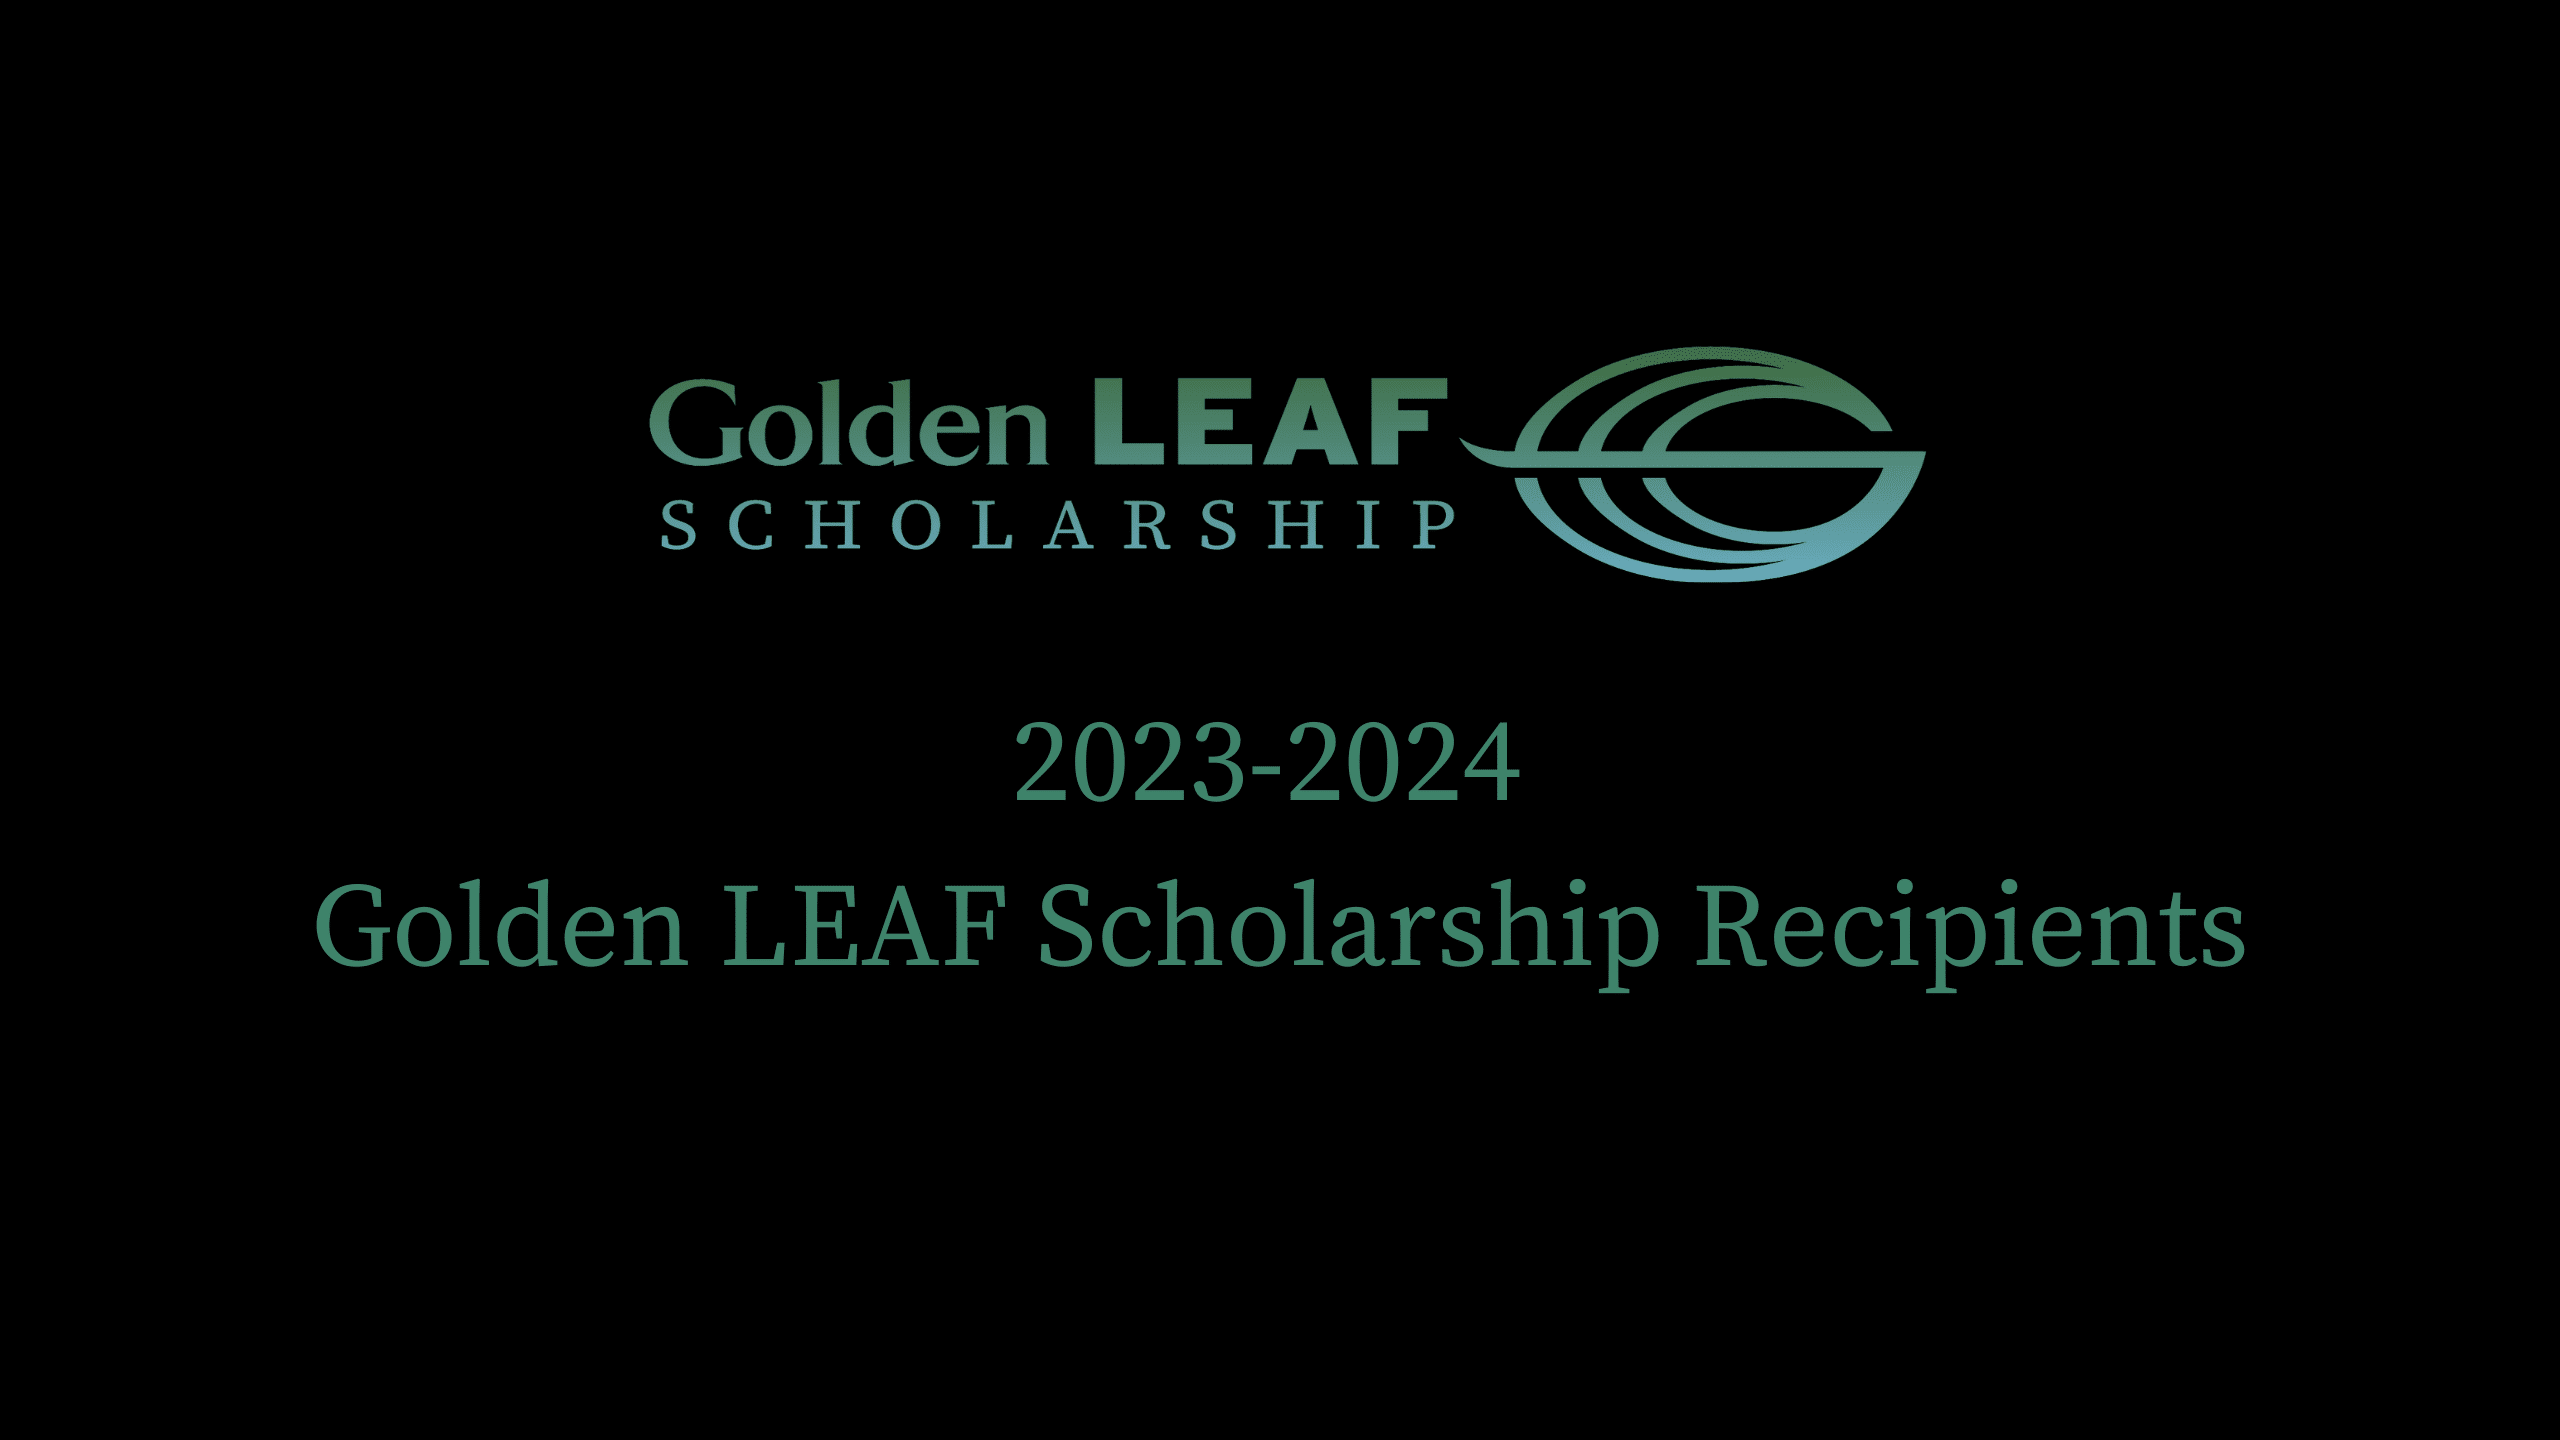 Golden LEAF announces 215 new Golden LEAF Scholarship recipients